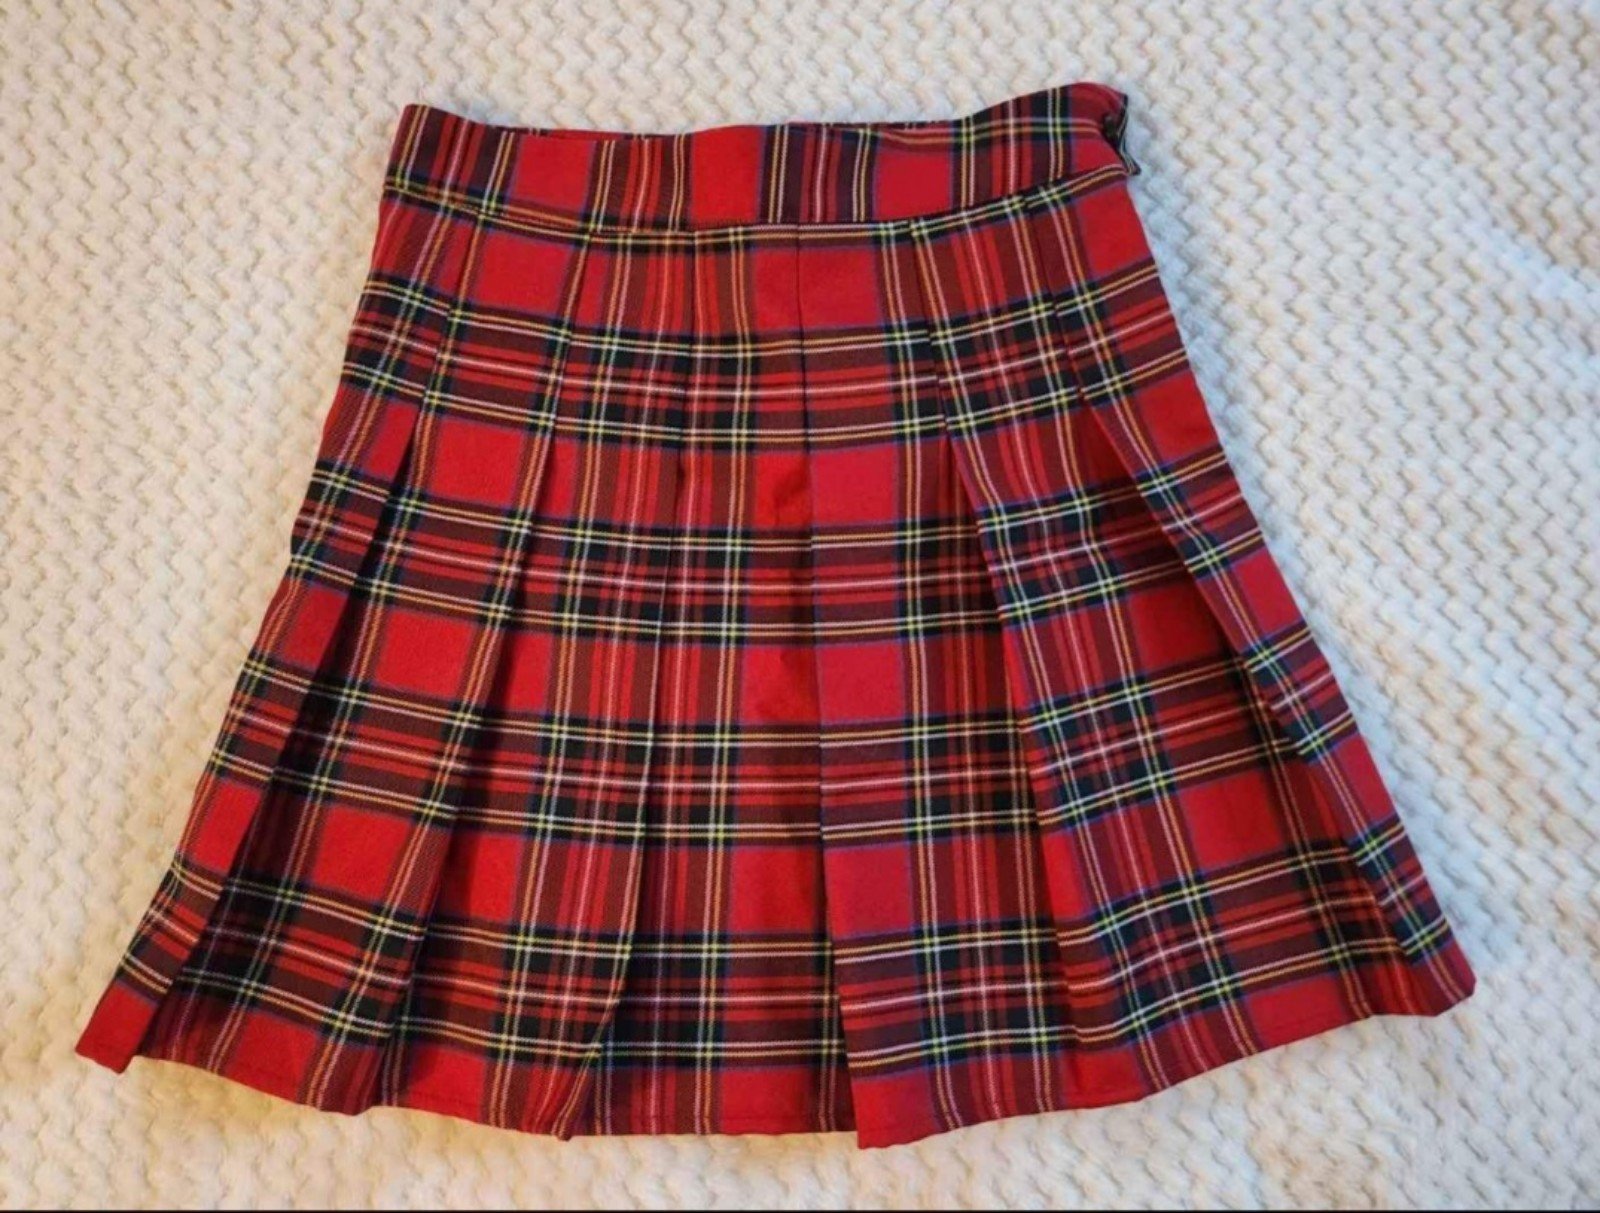 Stylish Red Plaid Pleated Skirt lKpFVSAvo New Style